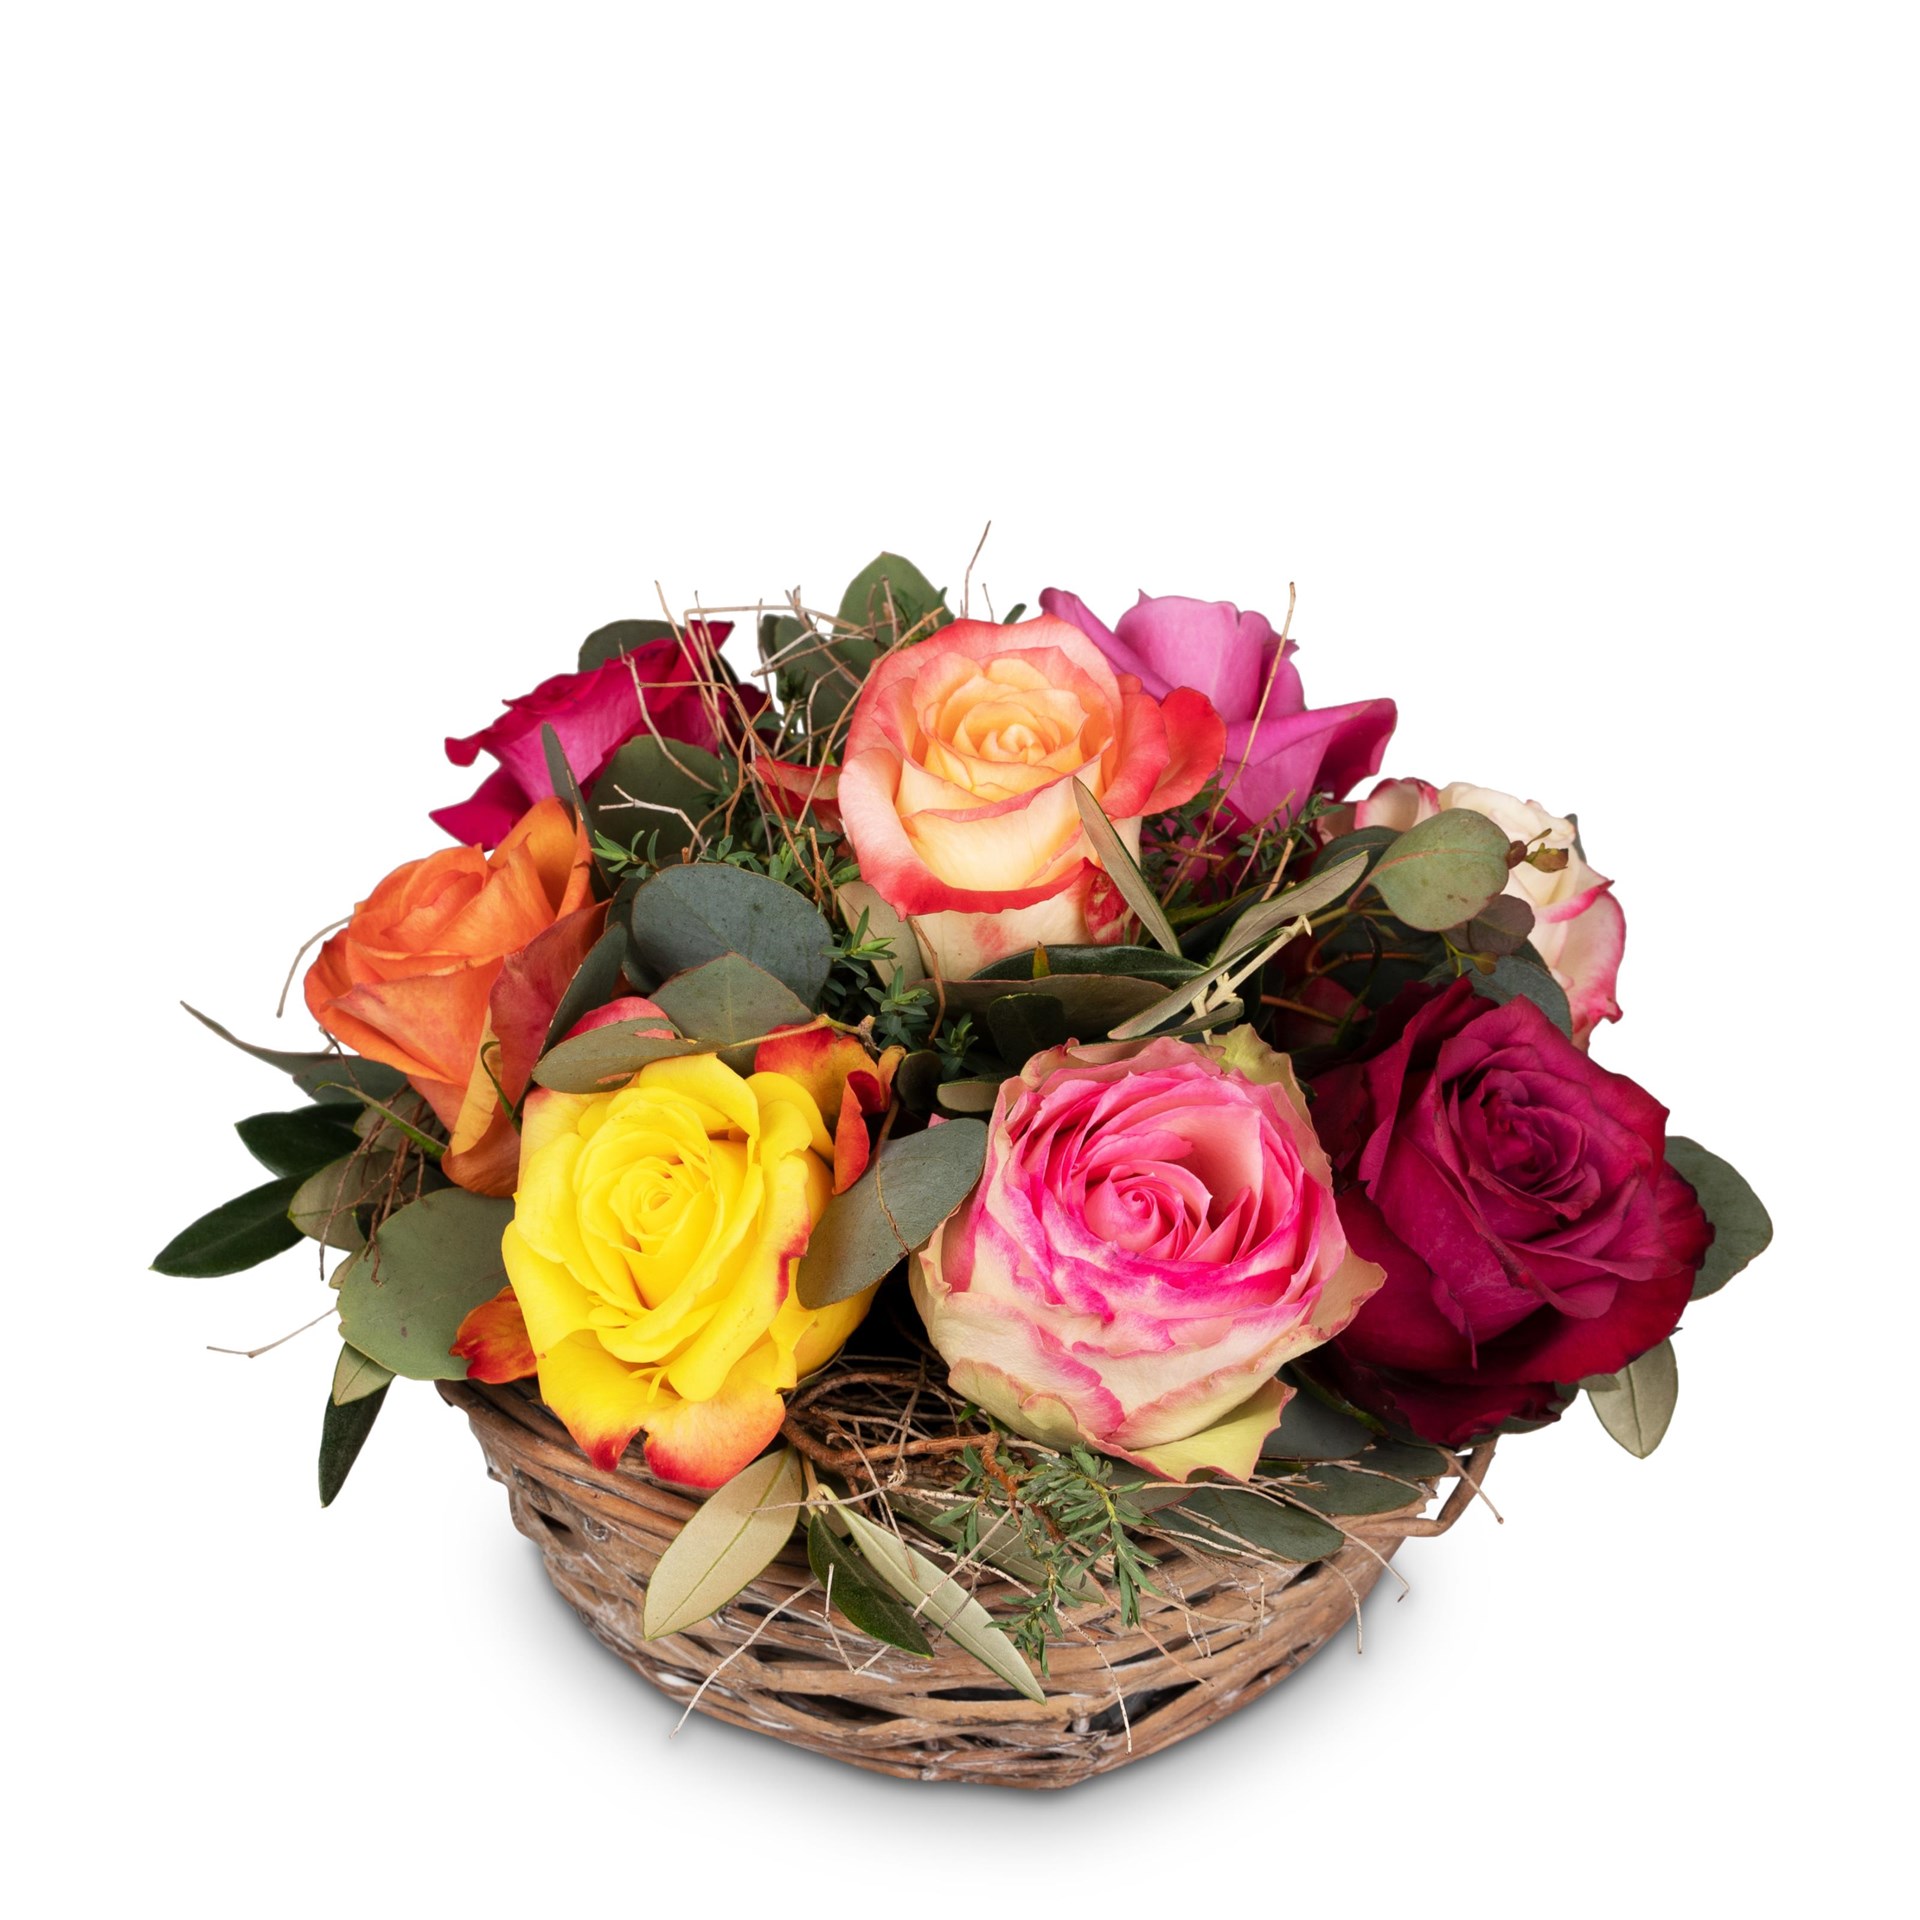 A Basket Full of Roses